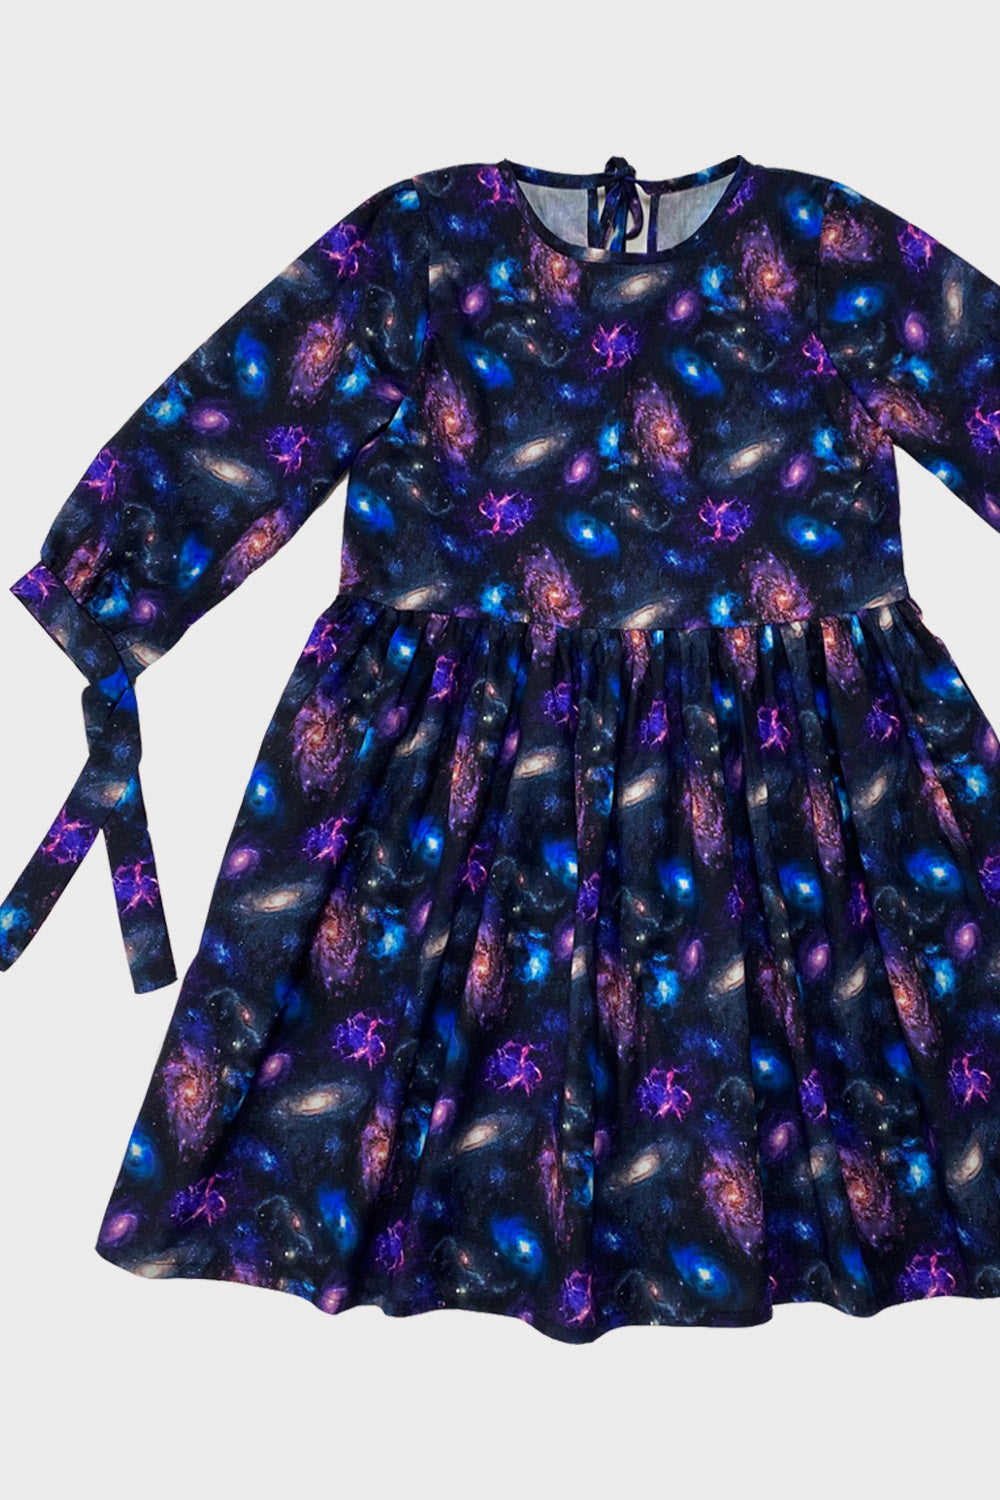 Mallory Dress in Galaxy